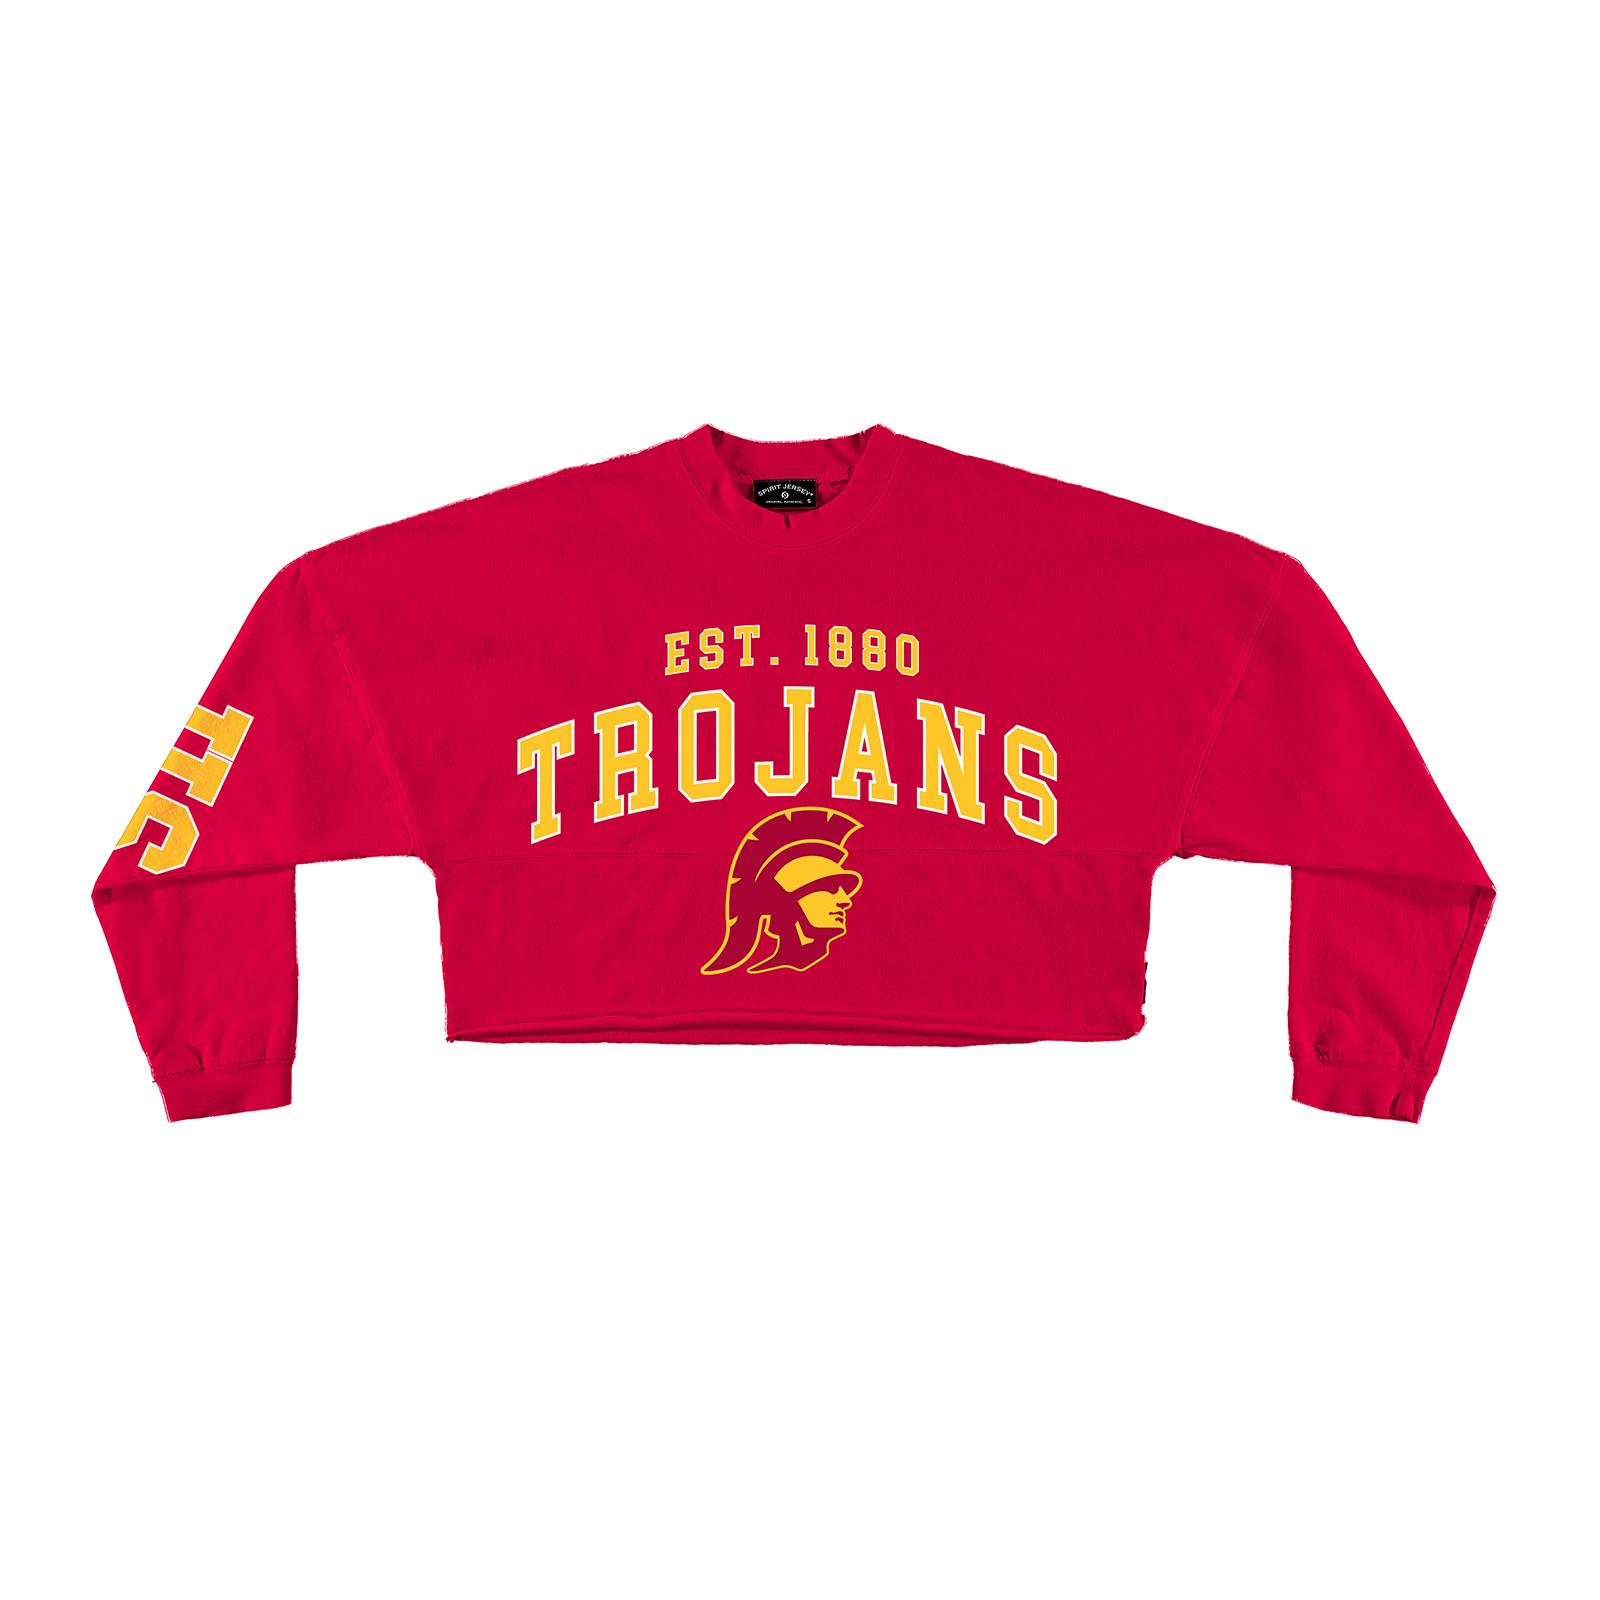 USC Trojans Womens Cropped Spirit Jersey image01